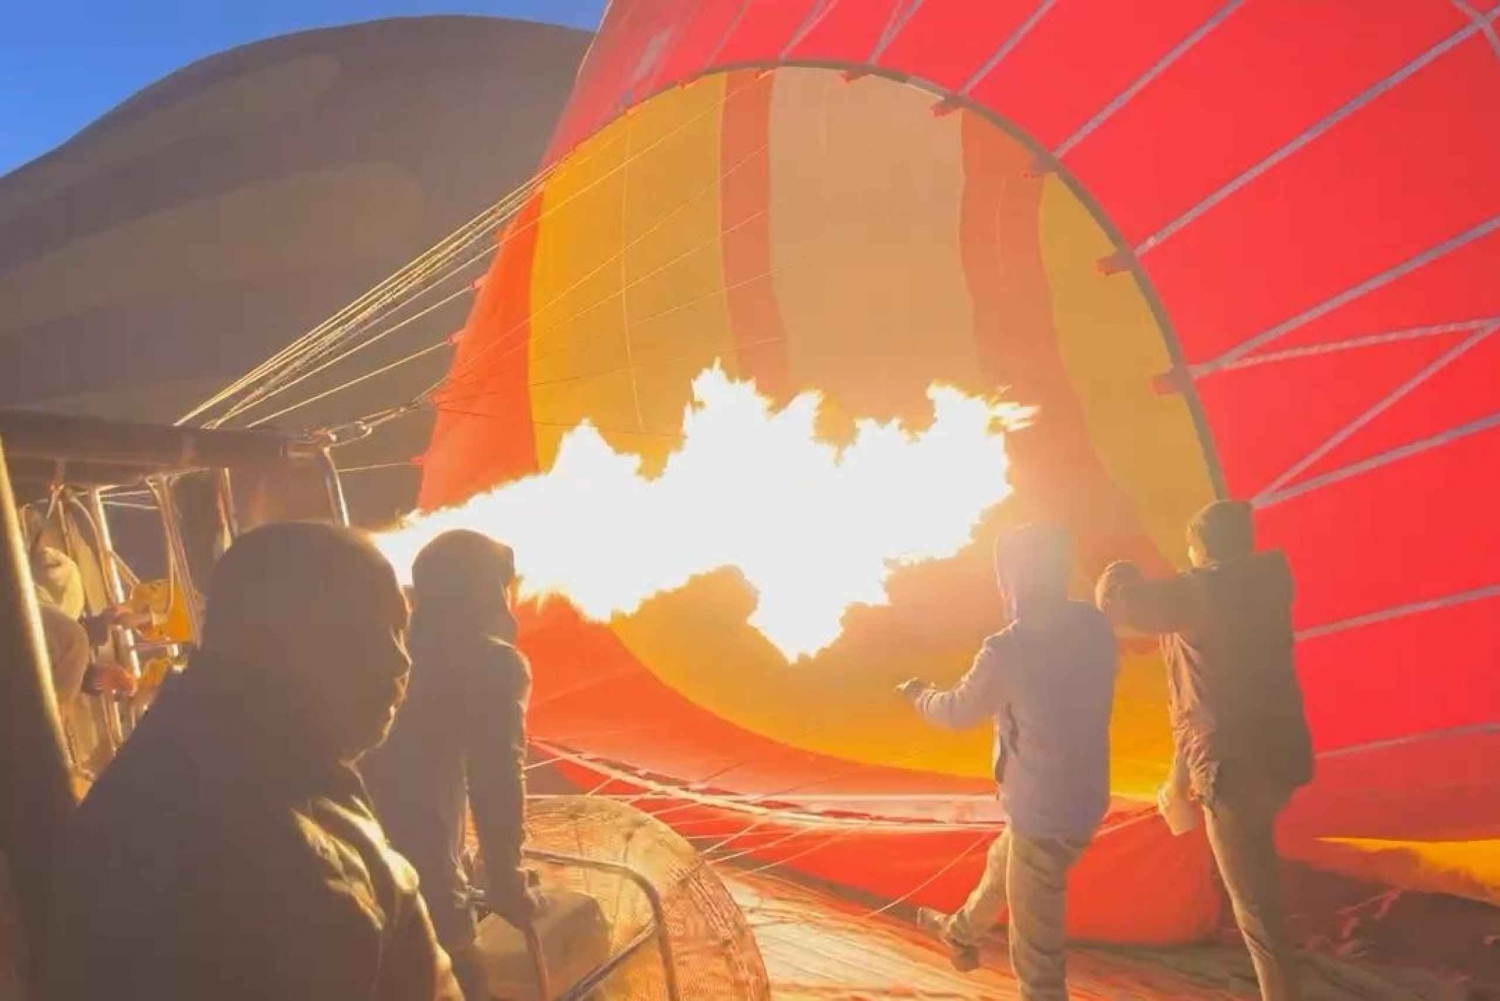 Dubai: Luchtballon met kamelen-, ATV- en paardenritten